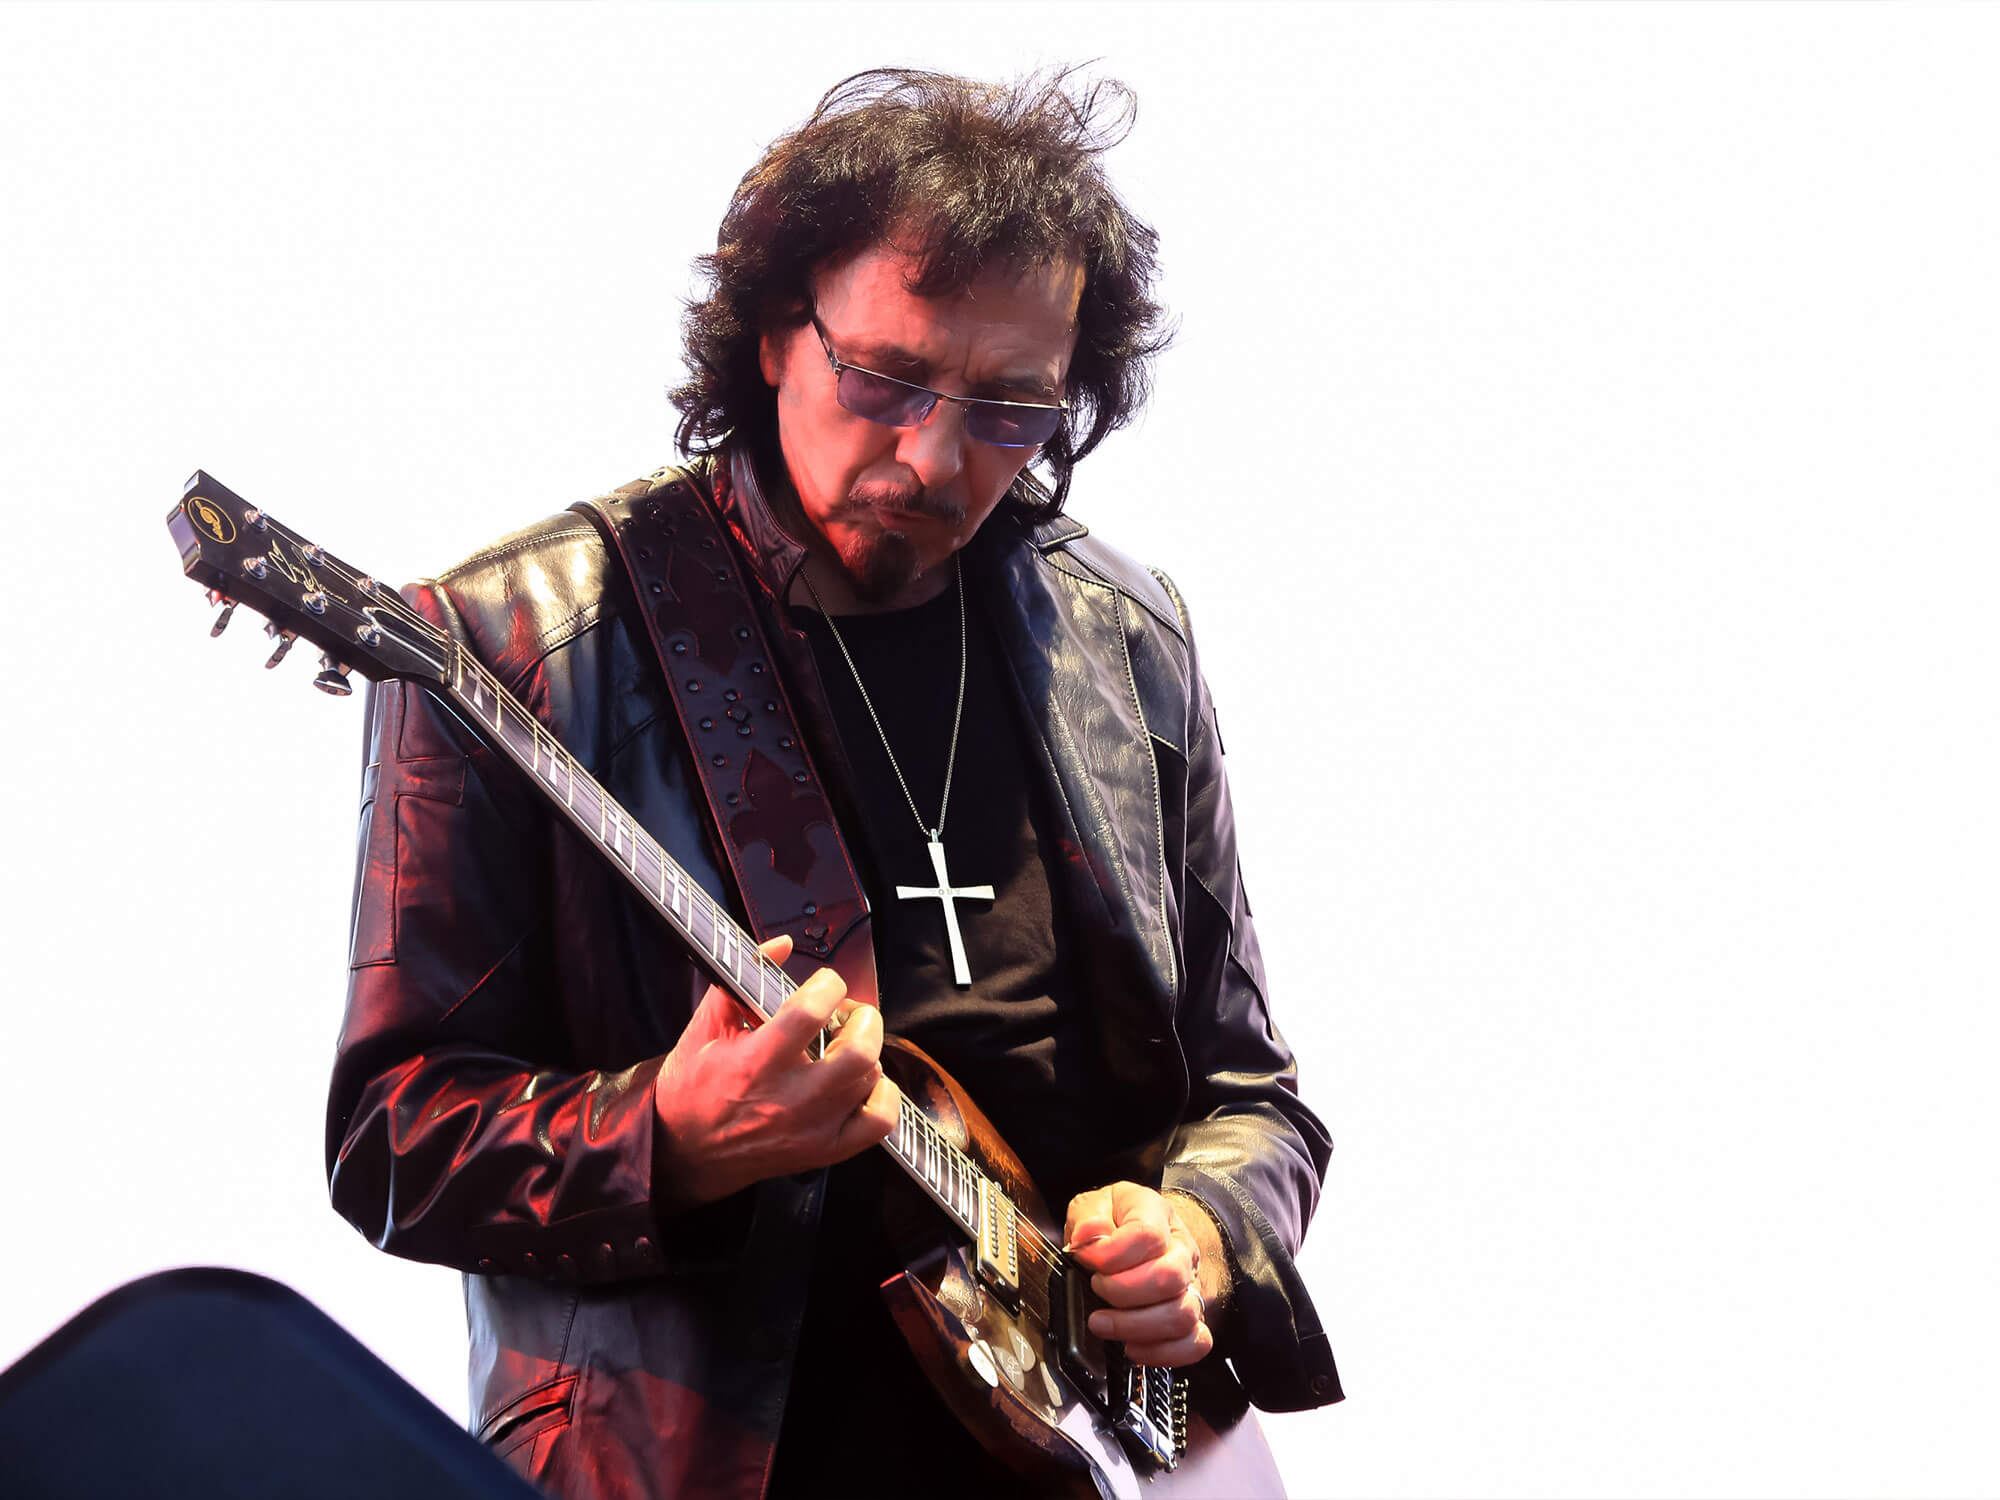 Tony Iommi performing live